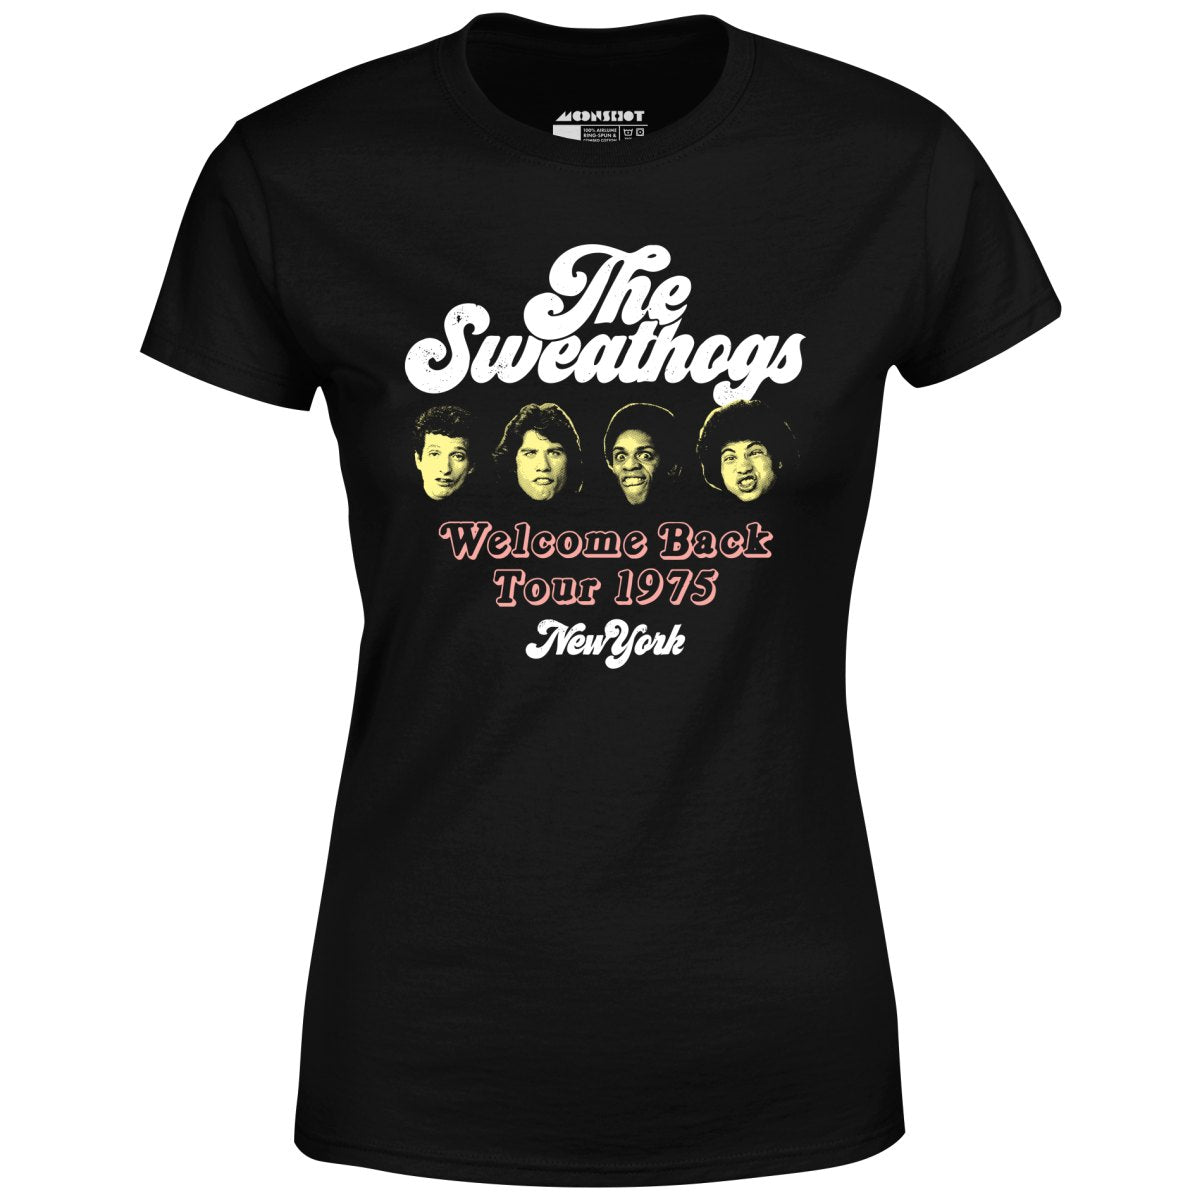 The Sweathogs - Women's T-Shirt